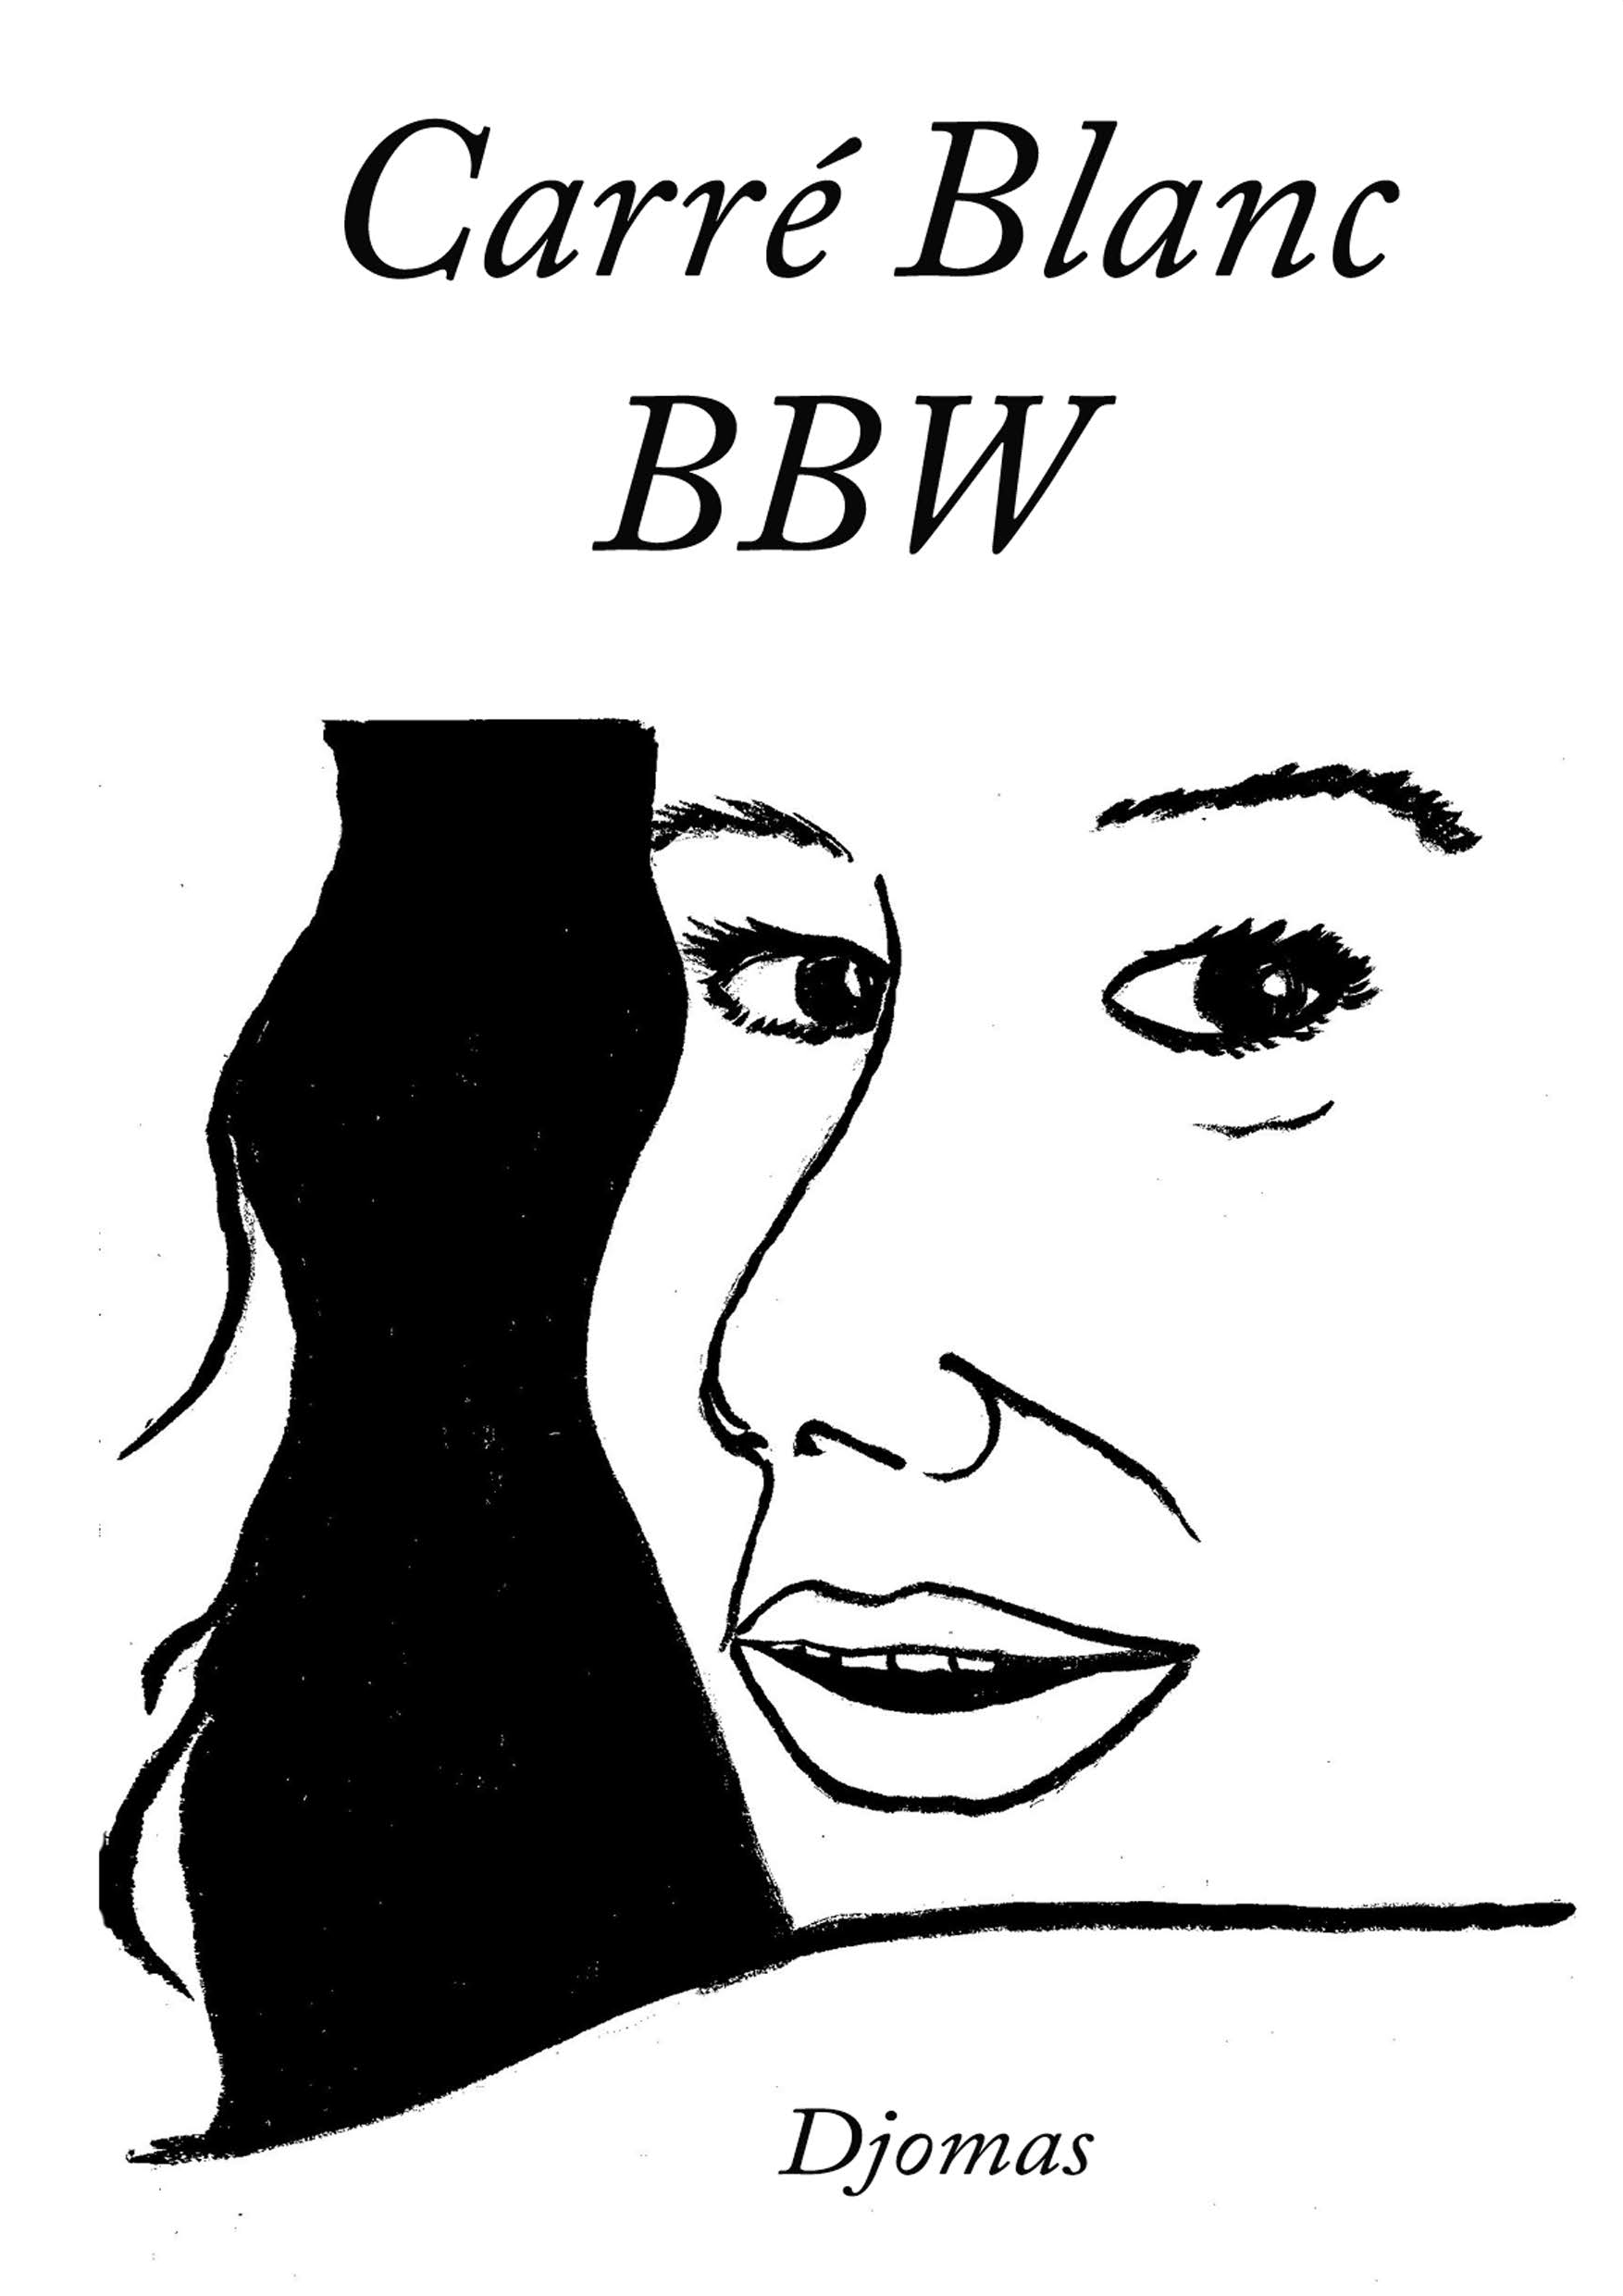 Carré blanc BBW